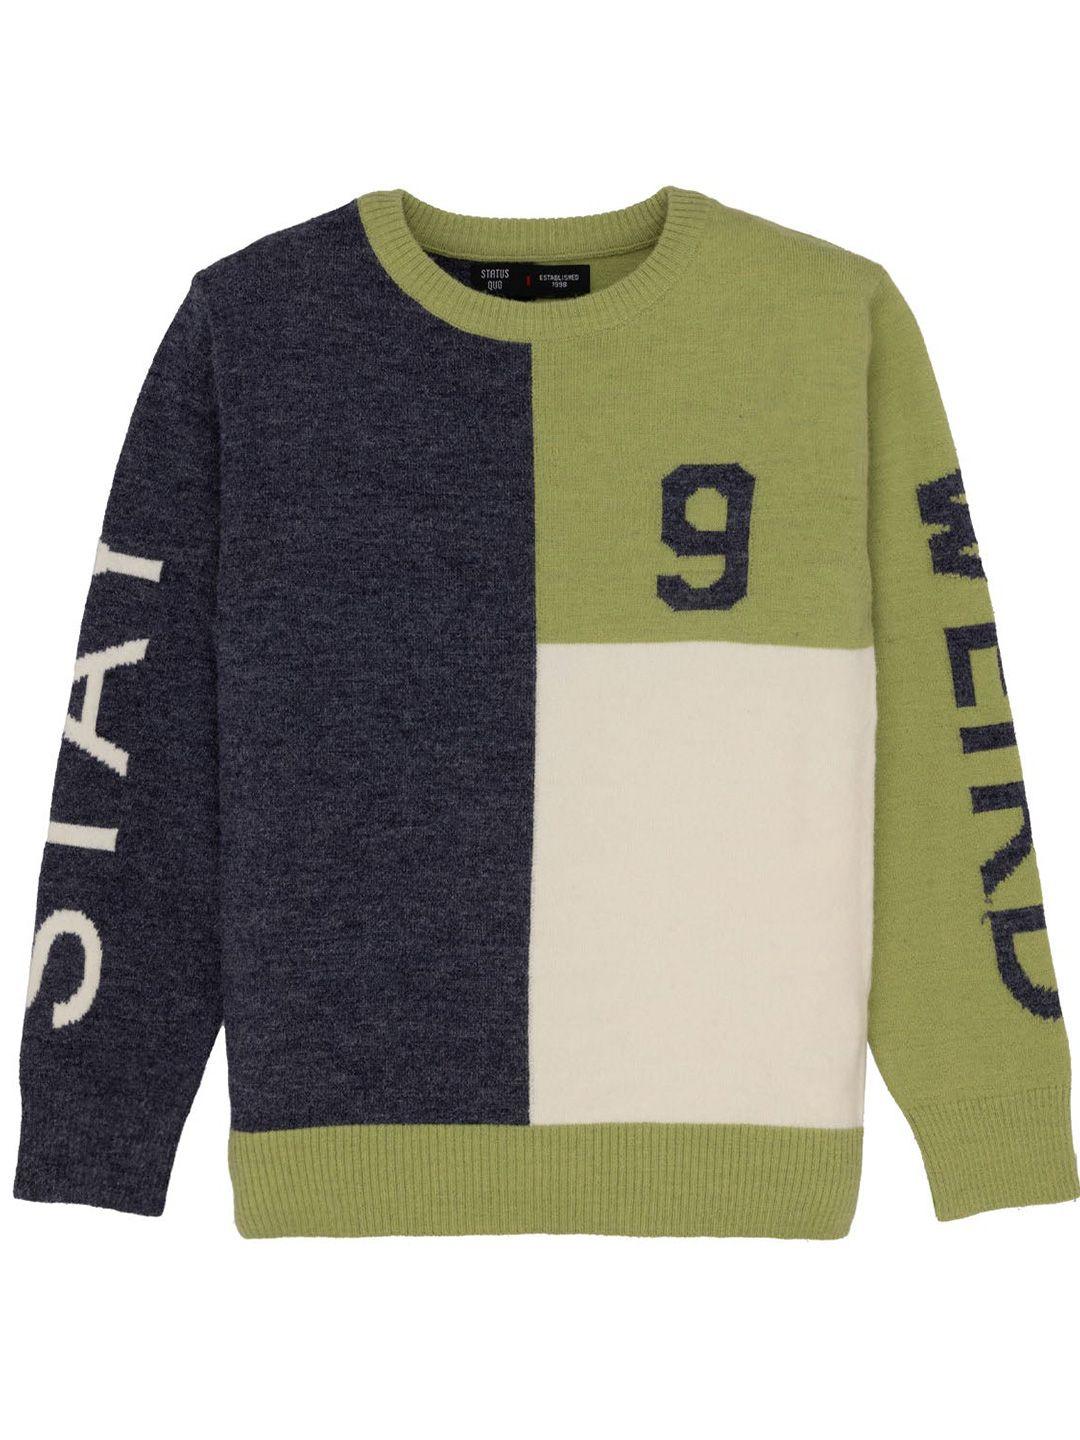 status quo boys colourblocked pullover sweater